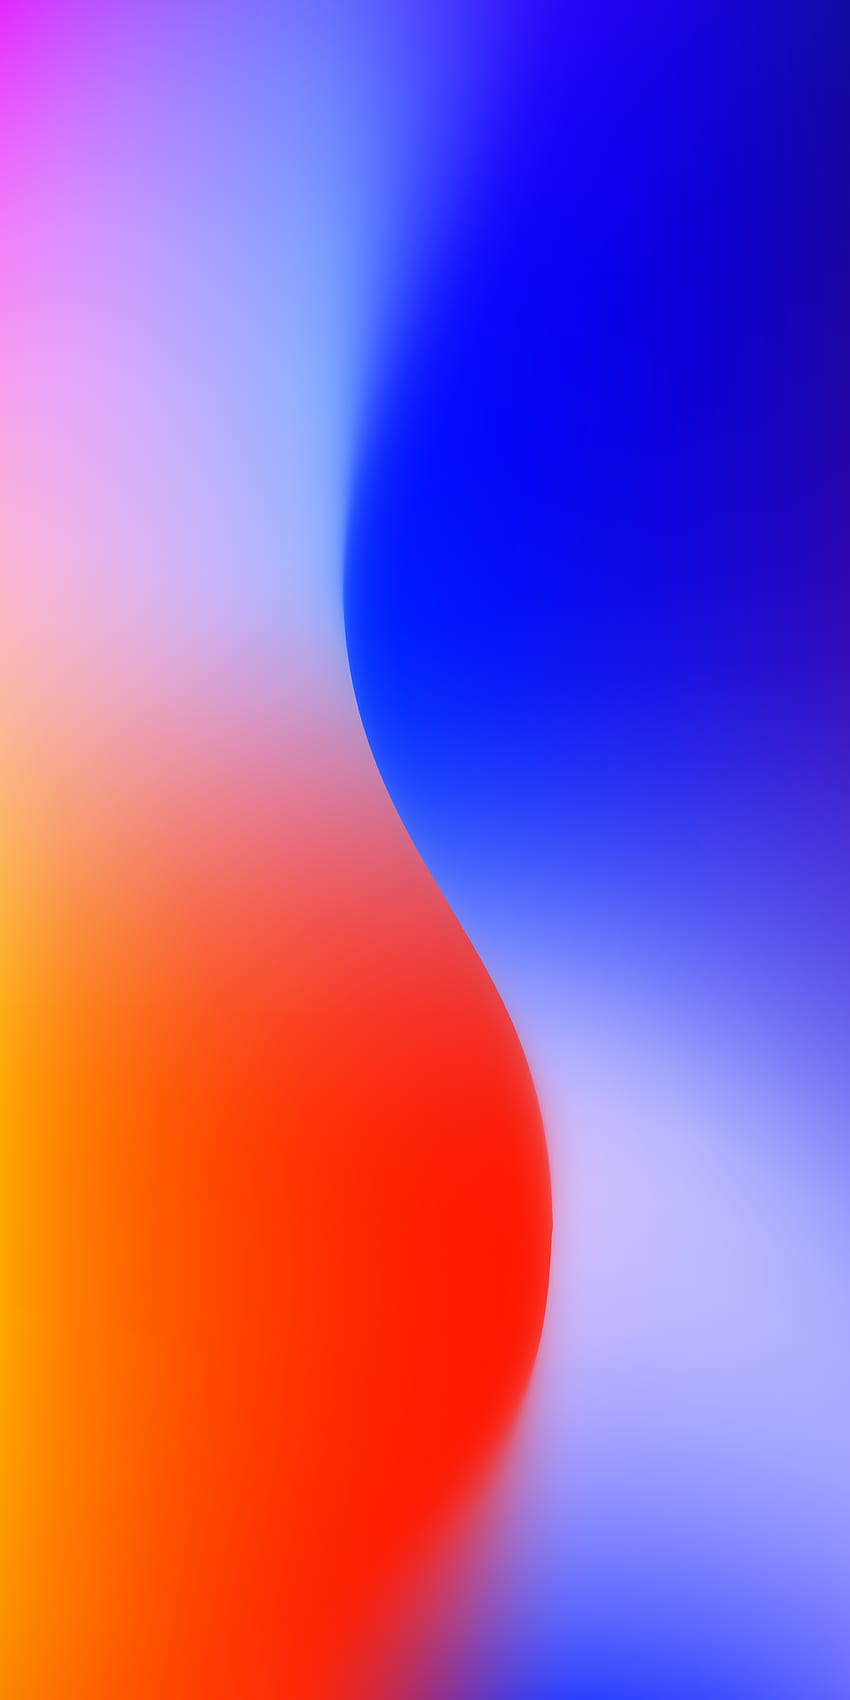 pomarańczowy i niebieski gradient S. ekran główny iPhone'a, kolorowy iPhone, Q, niebieski i pomarańczowy telefon Tapeta na telefon HD